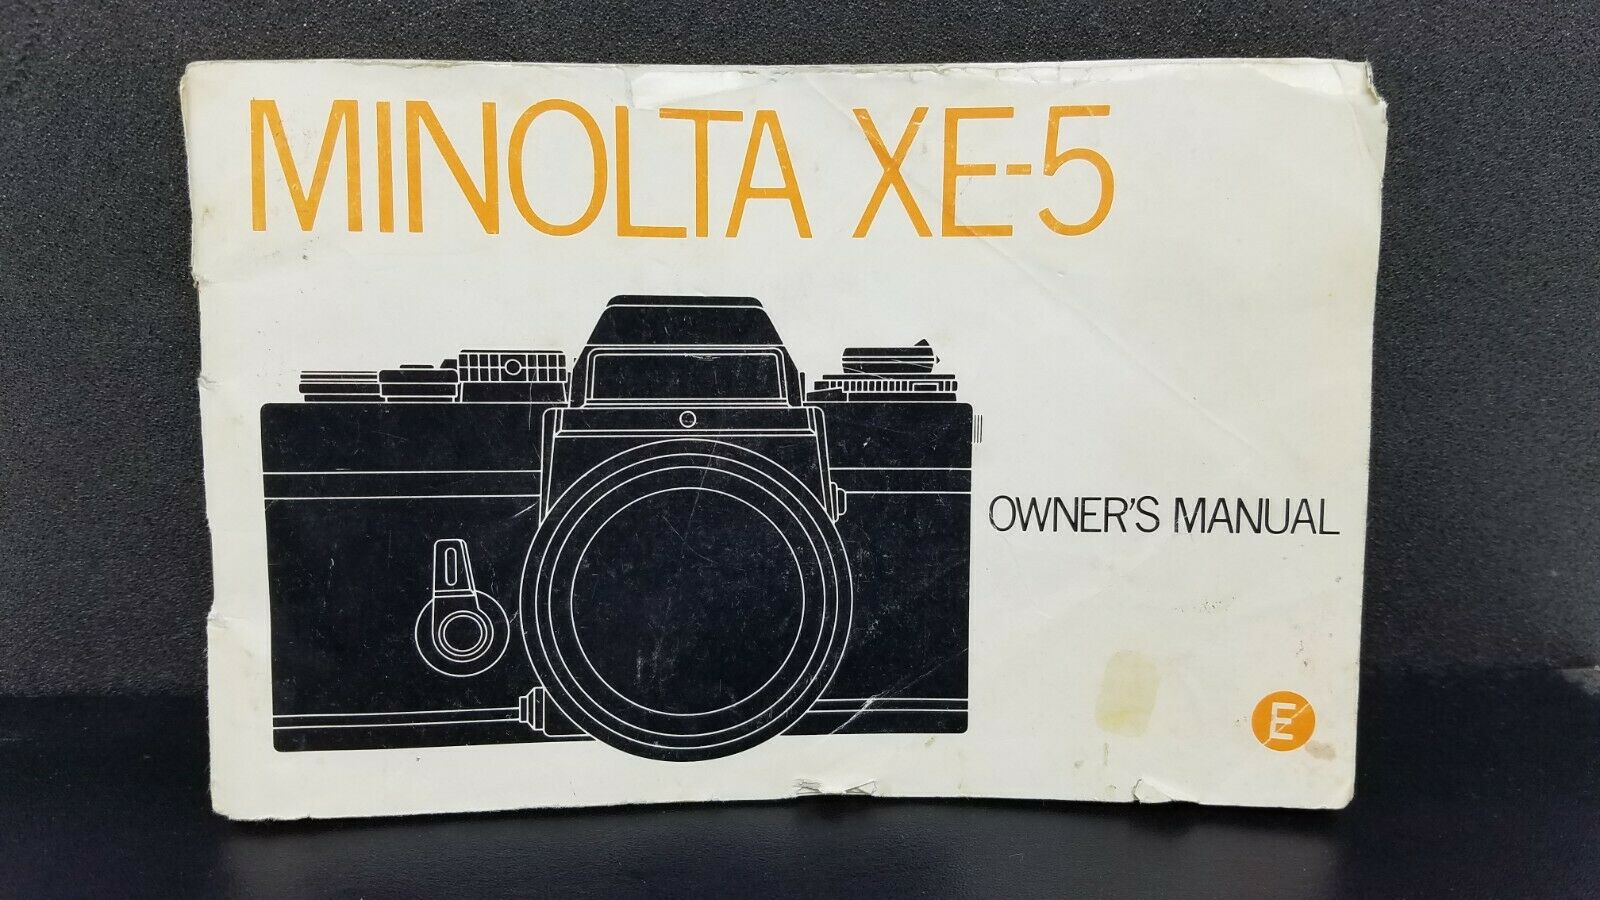 ORIGINAL Minolta XE-5  camera Owner's Operating Manual Instructions guidebook